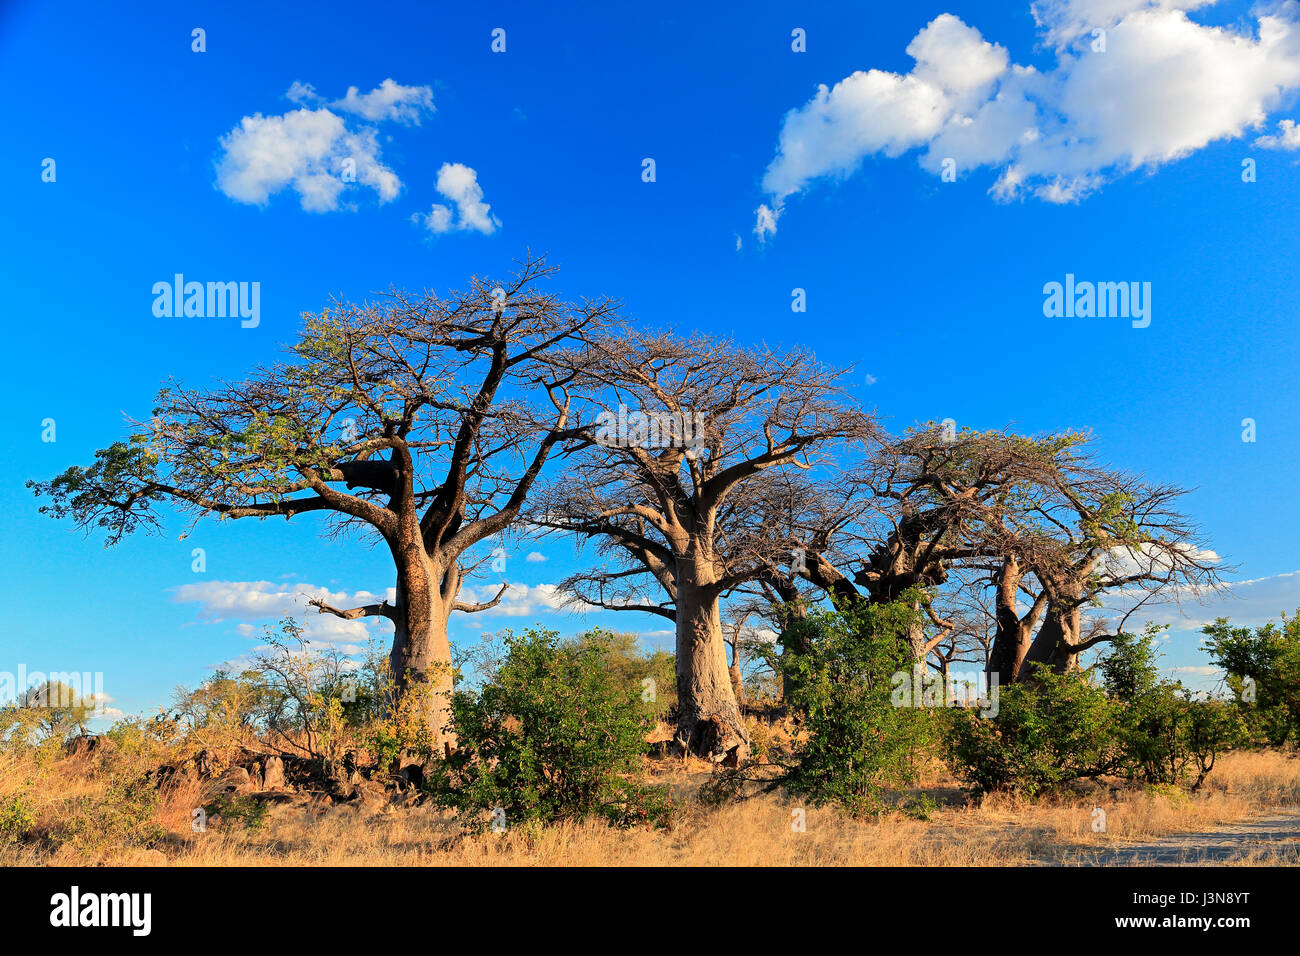 Affenbrotbaum, Adansonia digitata, Savuti, Chobe National Park, Botswana Foto Stock